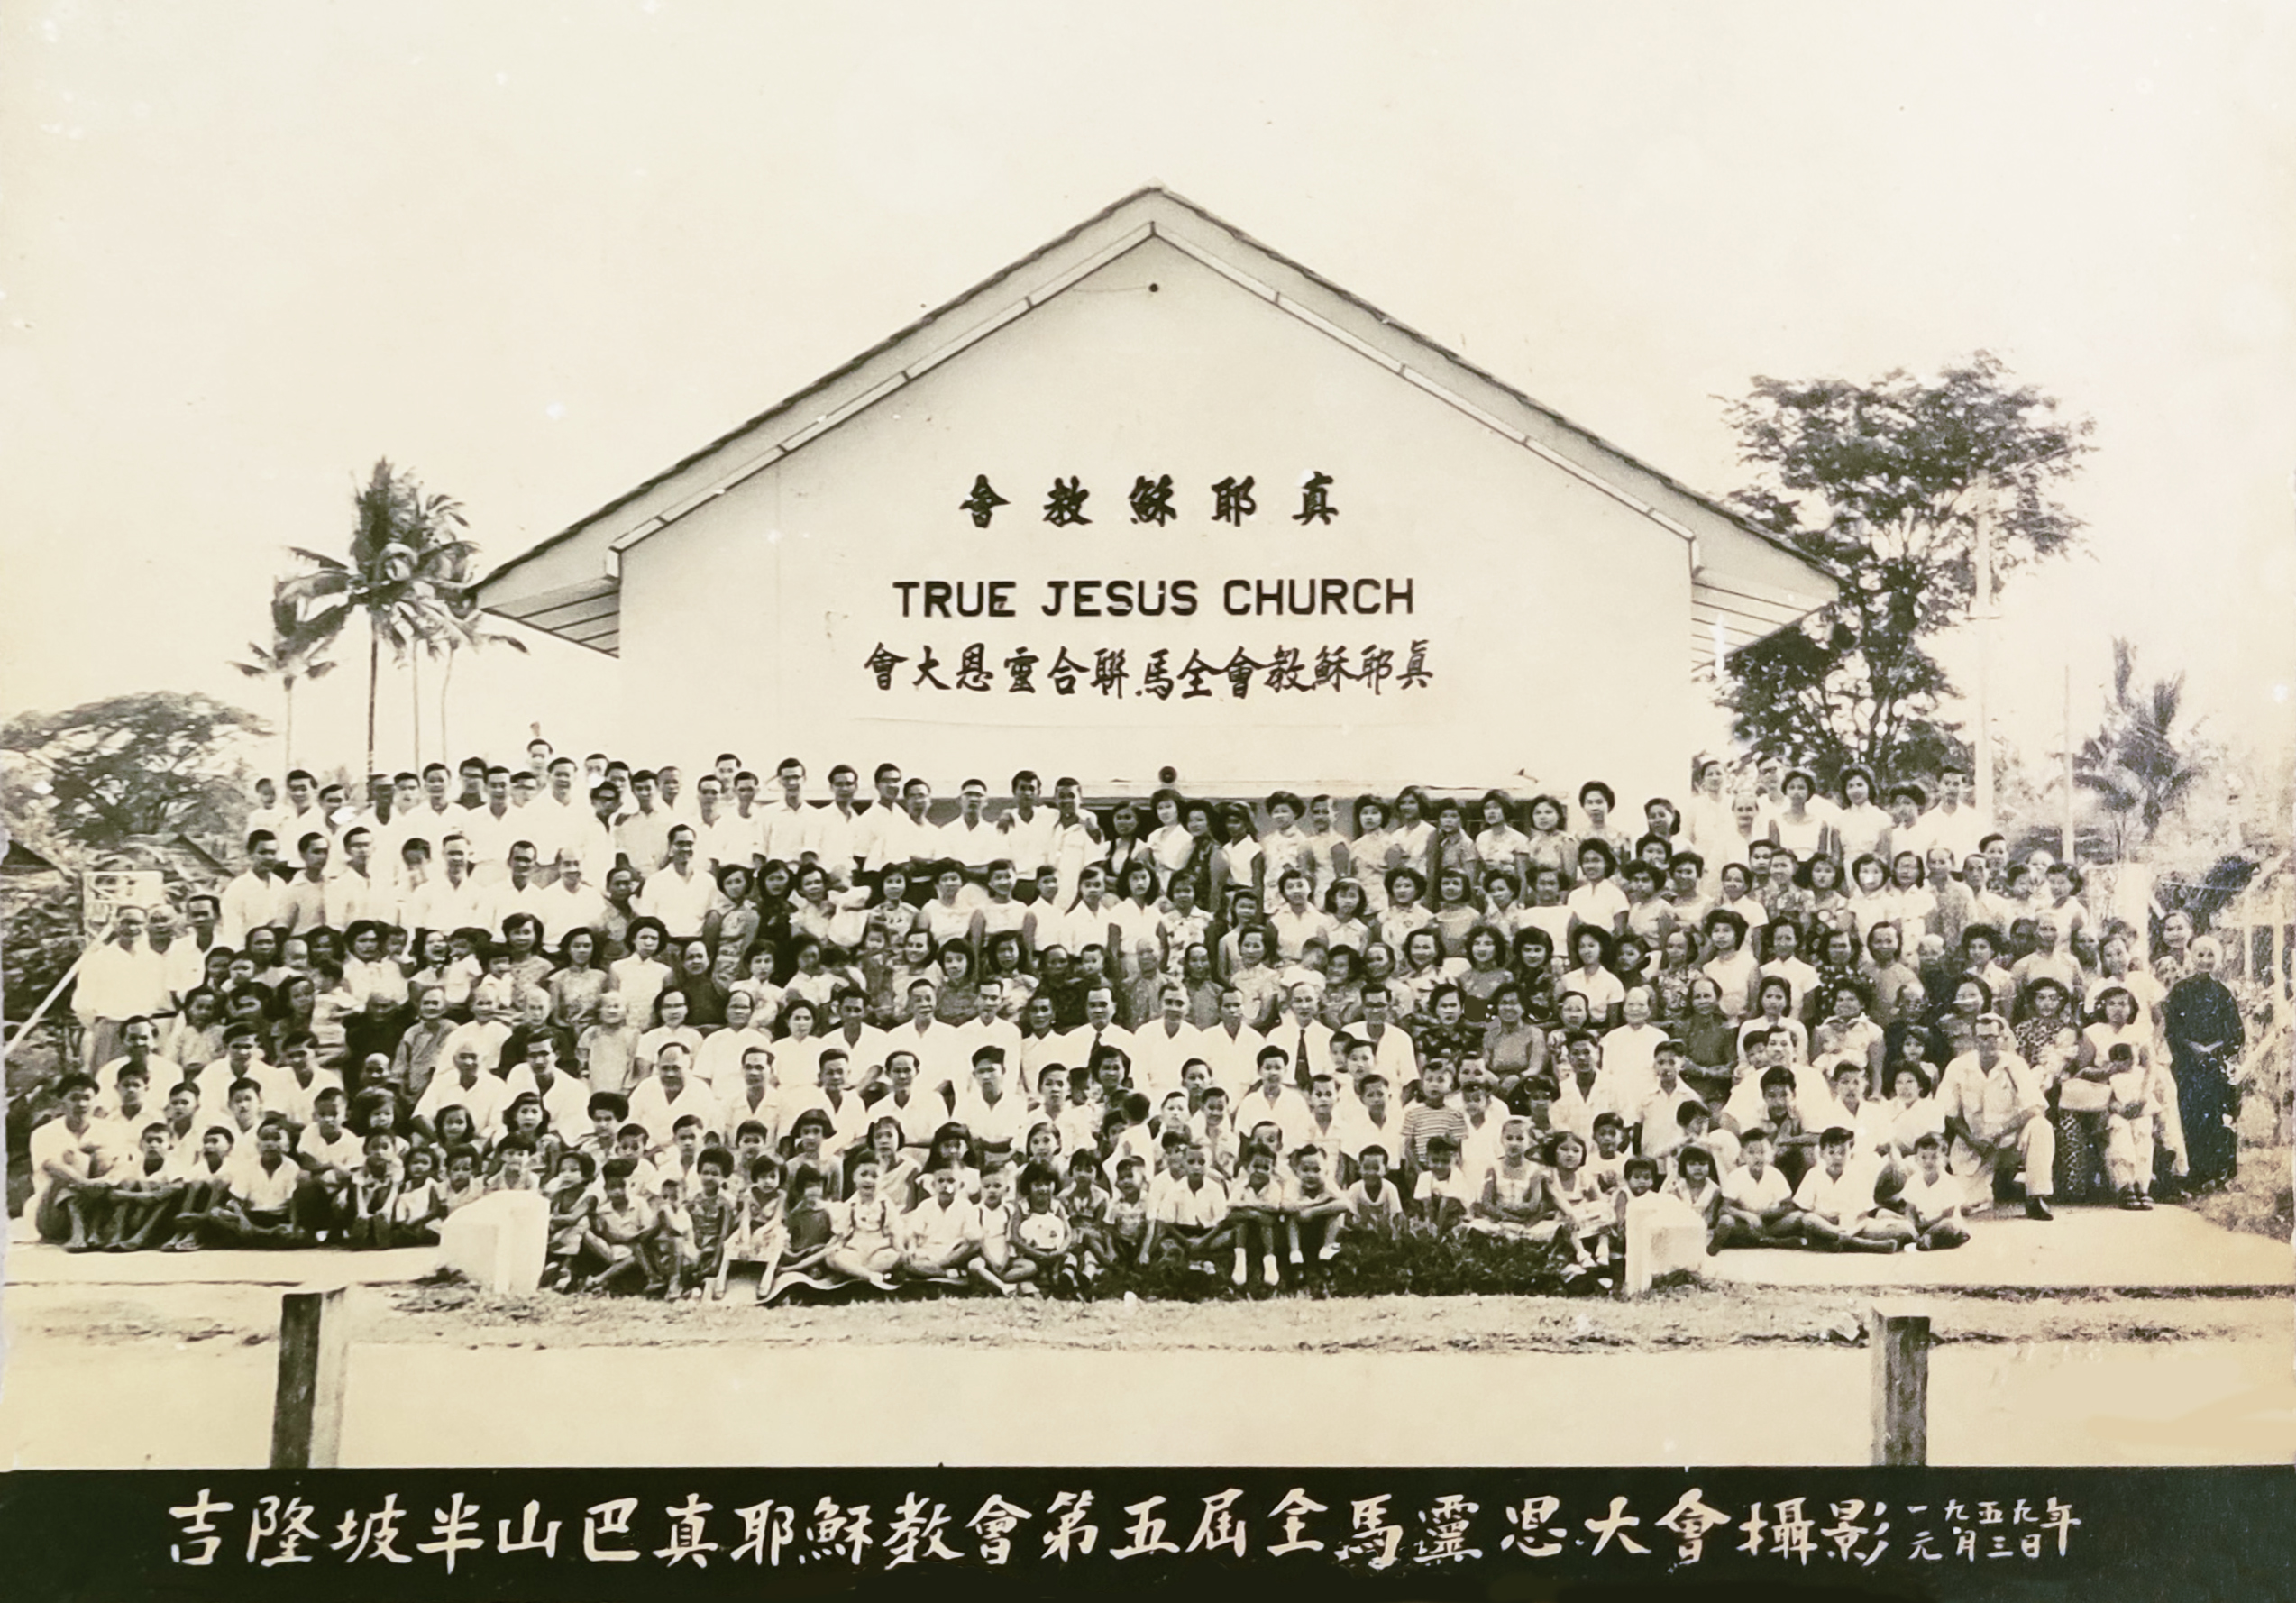 吉隆坡半山吧第5届全马灵恩大会 5th Nationwide Spiritual Meeting held at Pudu, Kuala Lumpur - 1959